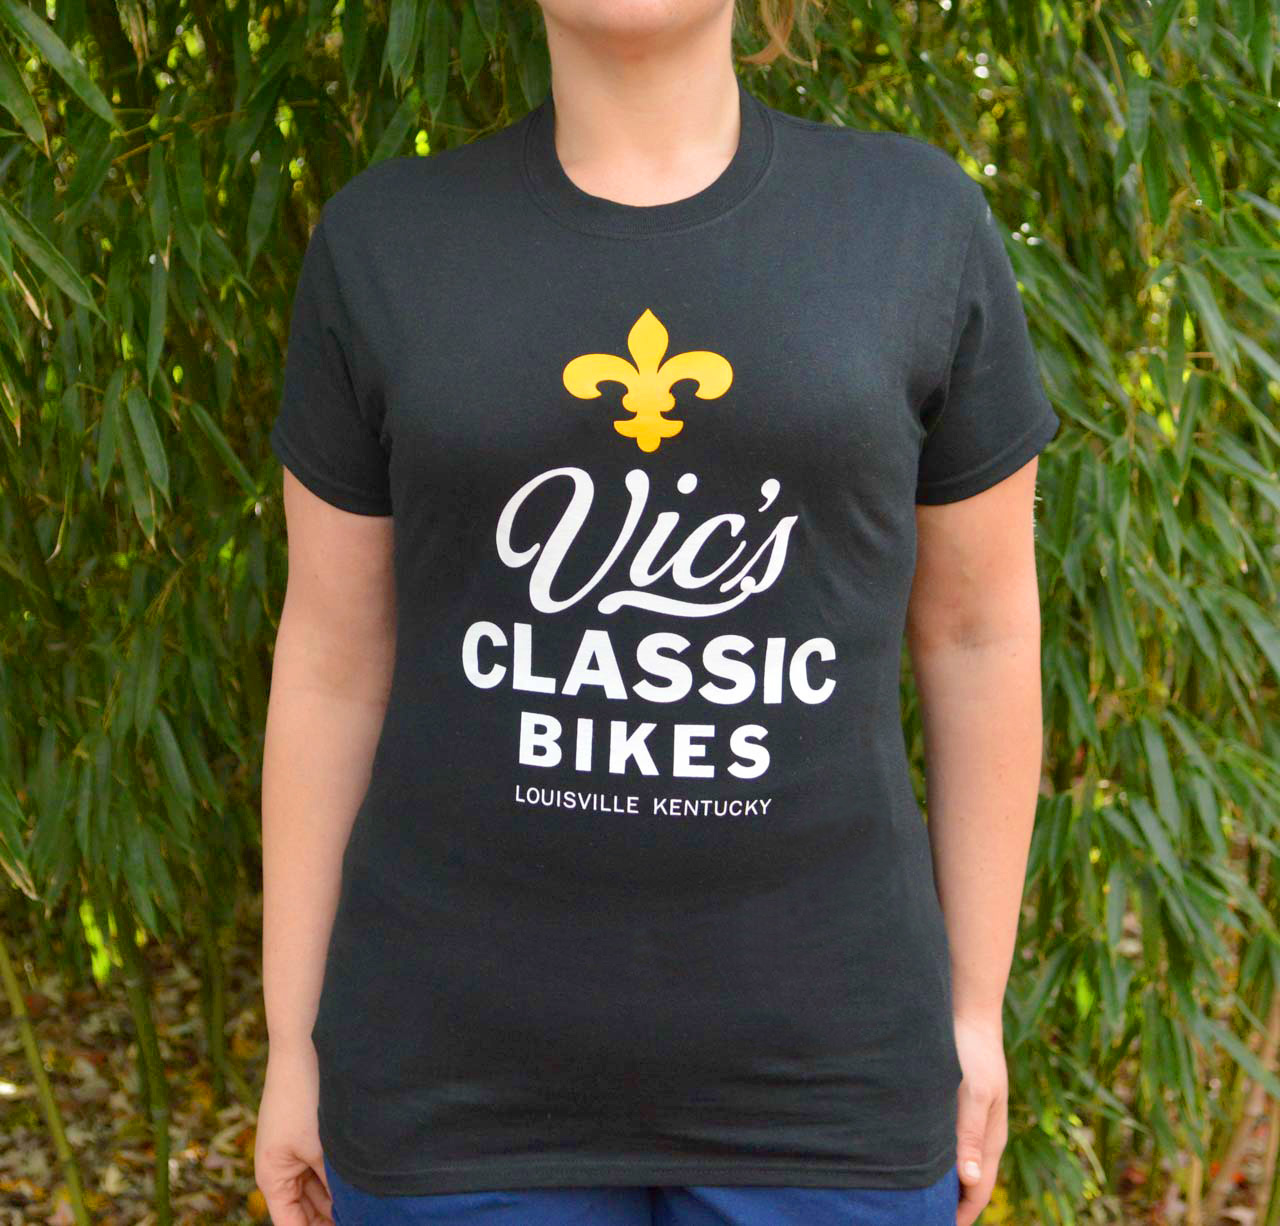 Vic’s Classic T-Shirt